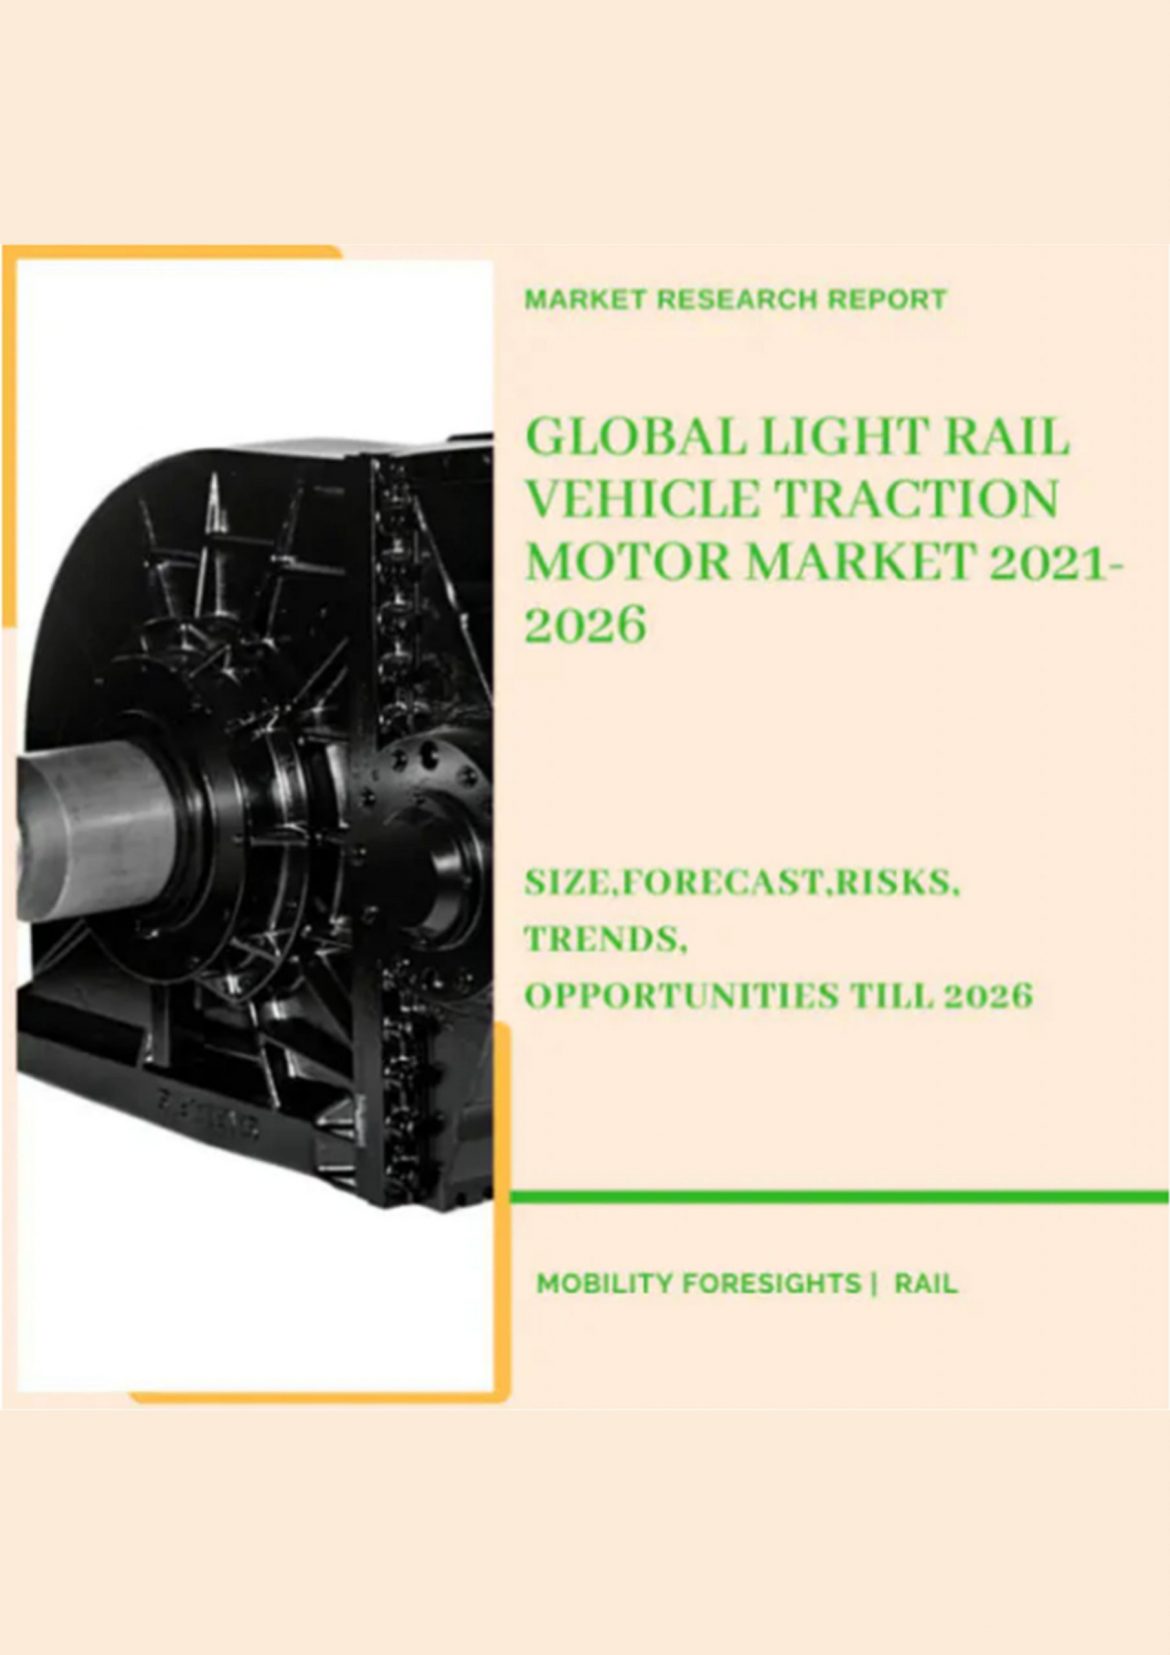 Global Light Rail Vehicle Traction Motor Market 2021-2026